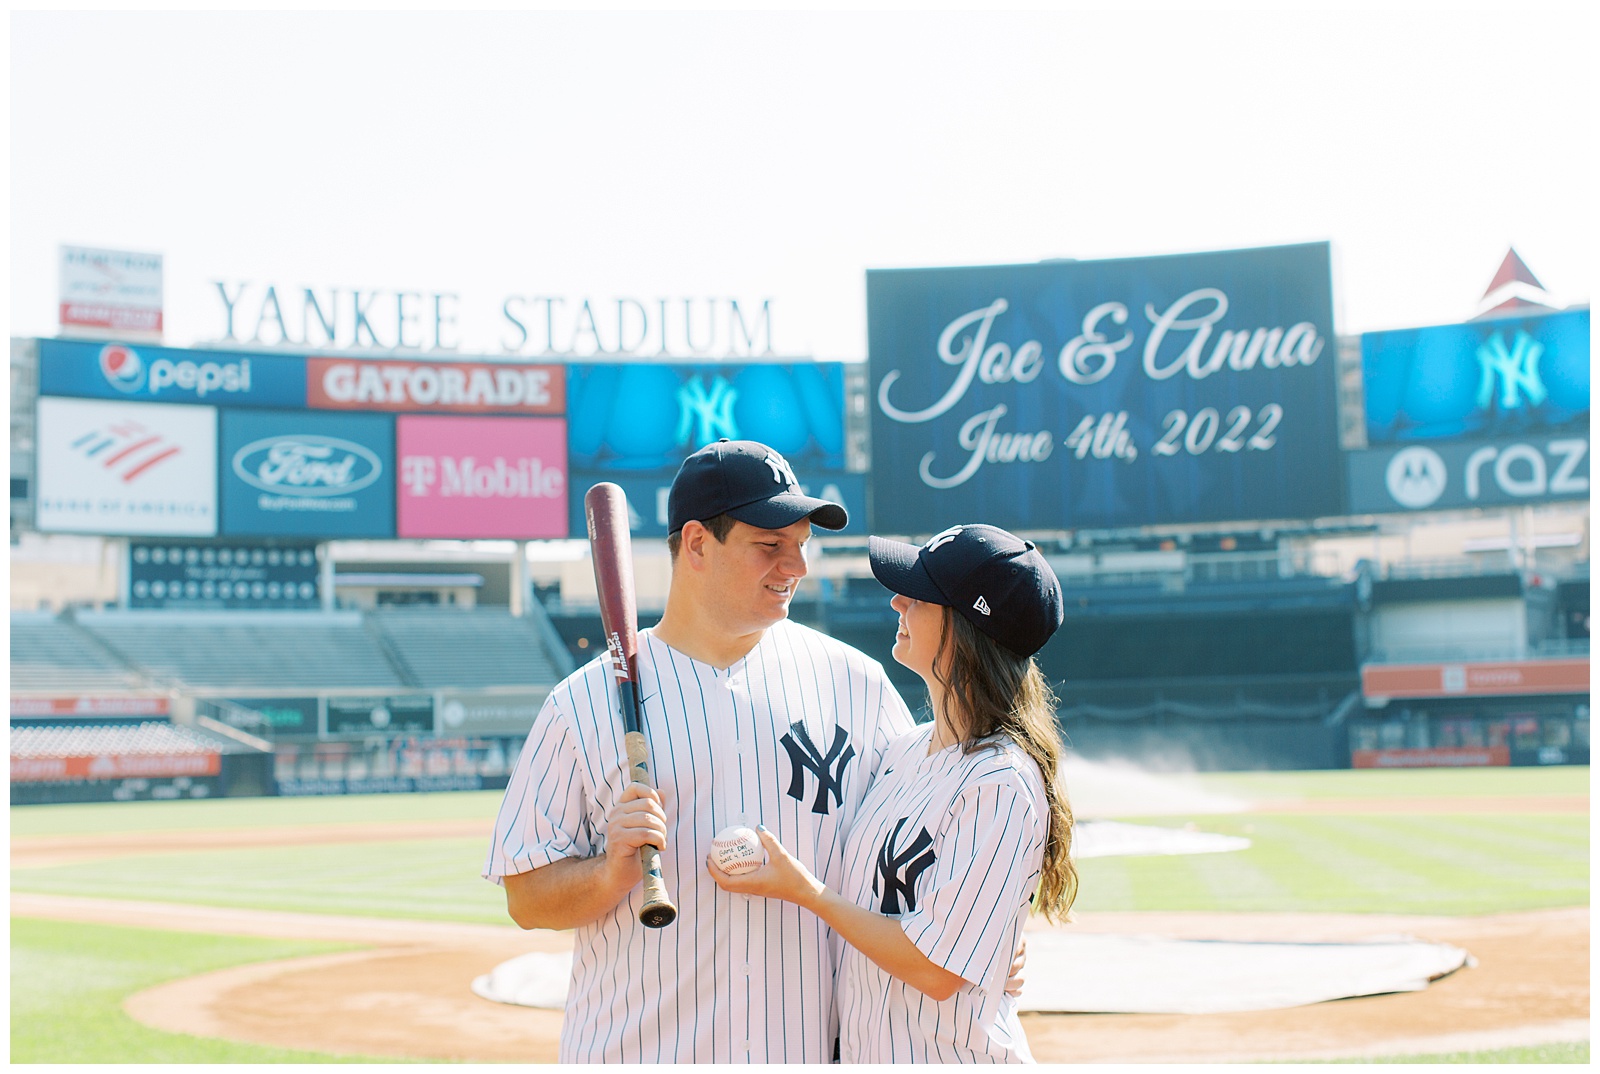 couple holds baseball bat and baseball in Yankee Stadium 